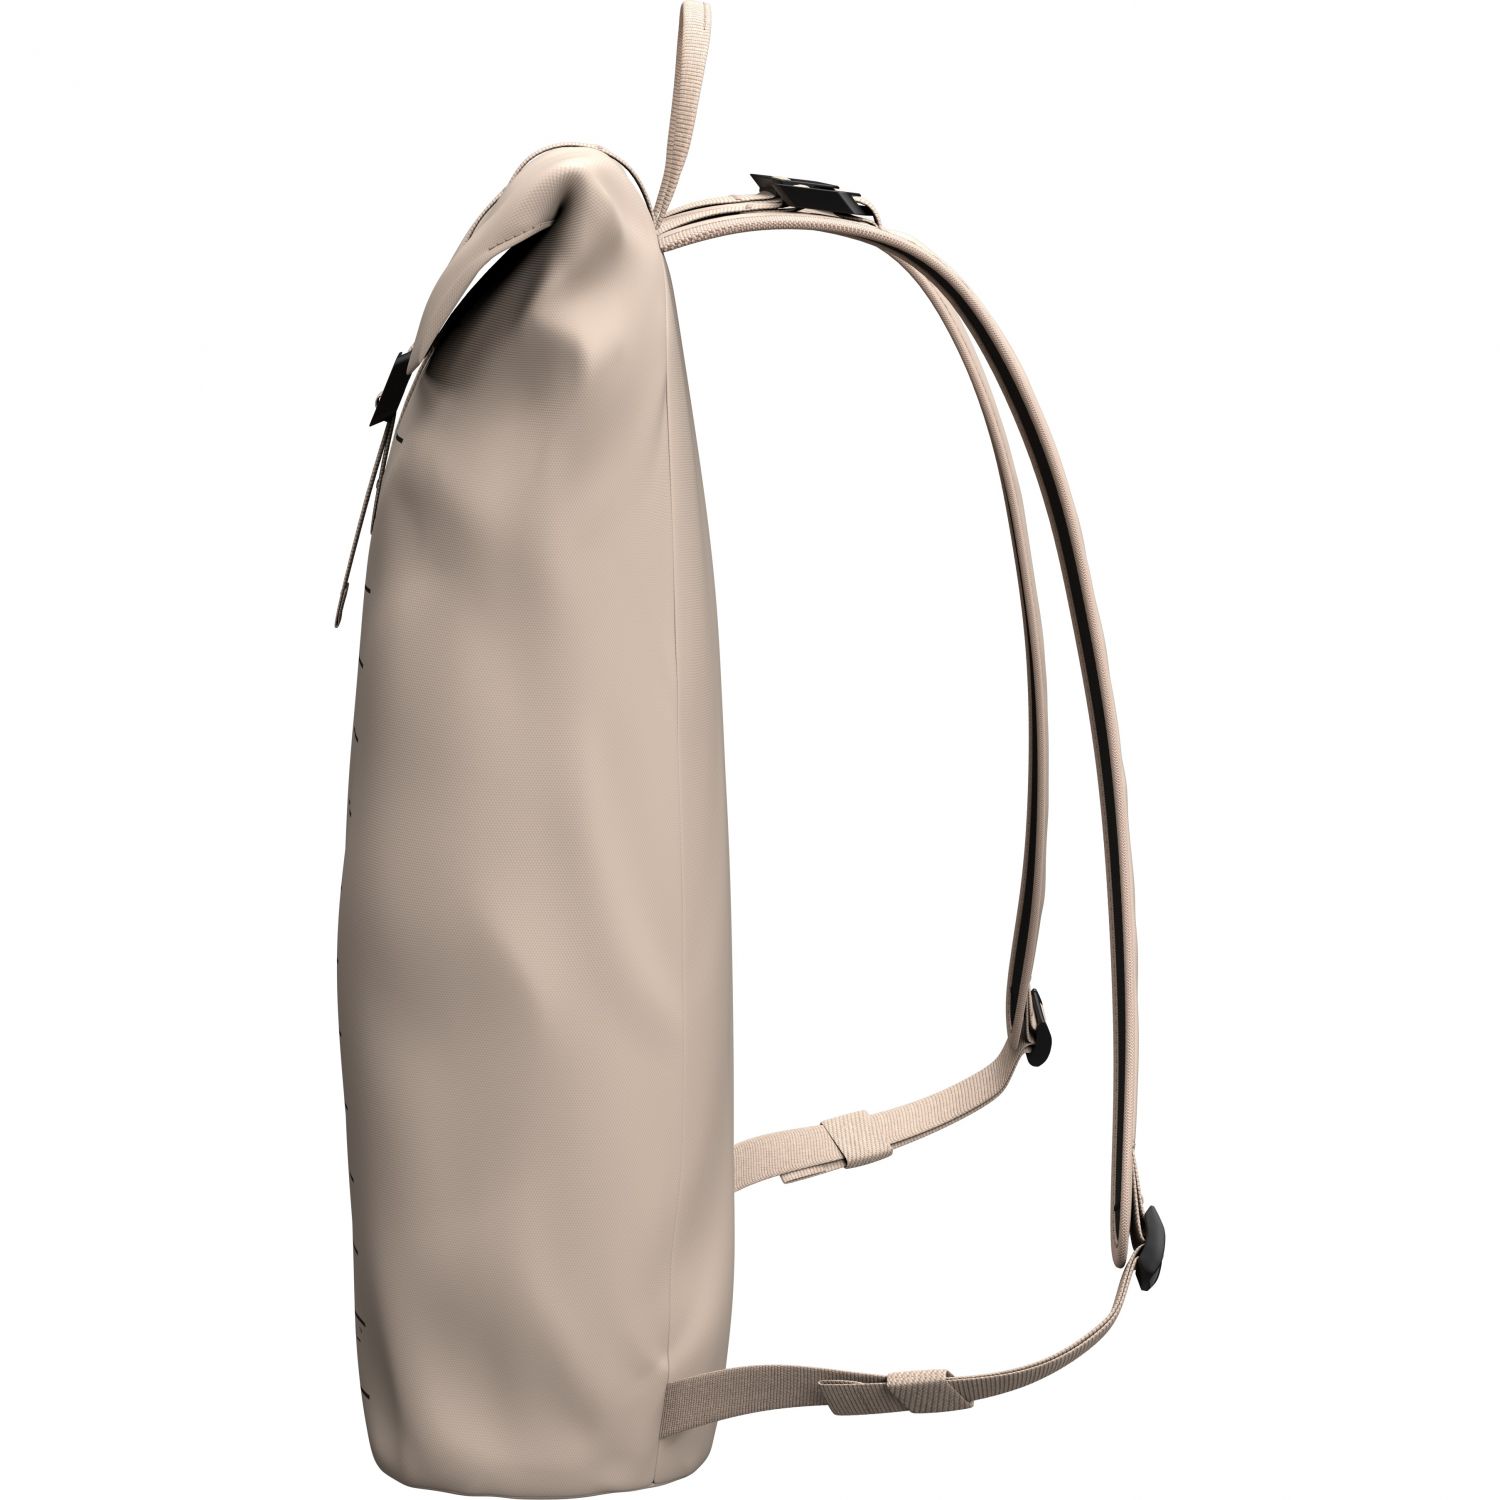 Db Essential Backpack, 12L, fogbow beige